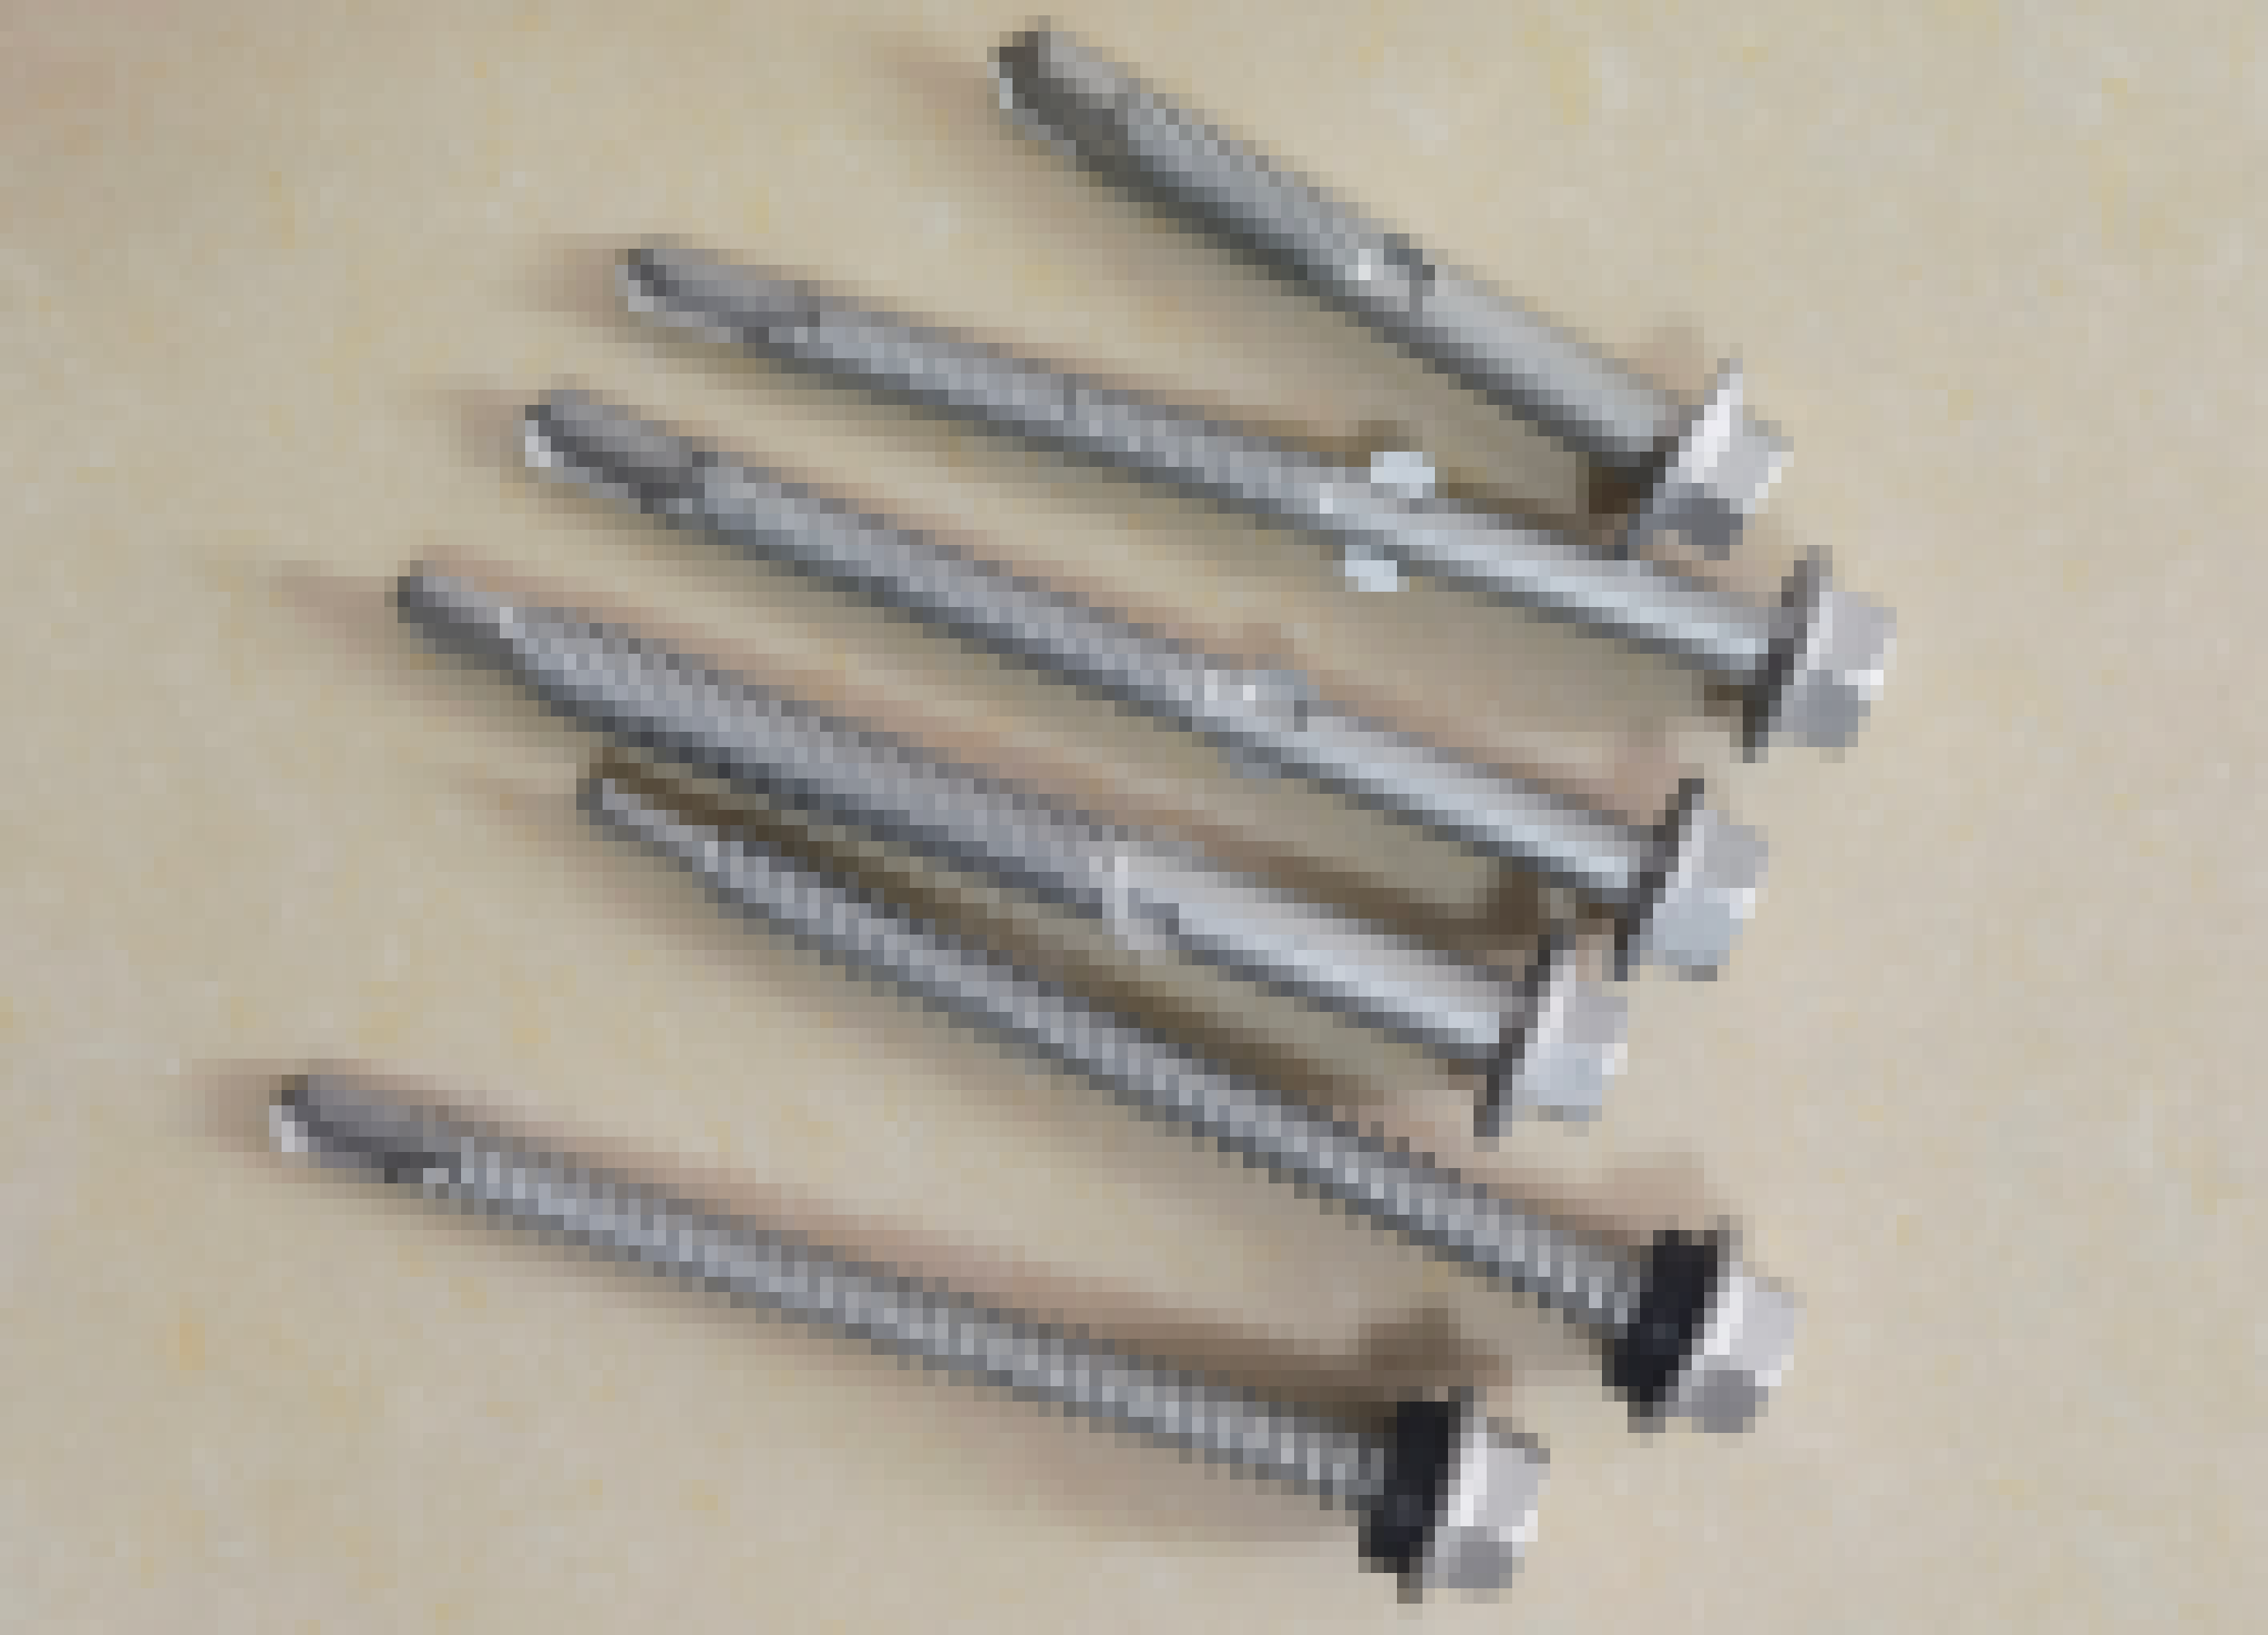 Hexagonal self-reaming anti-corrosion screws